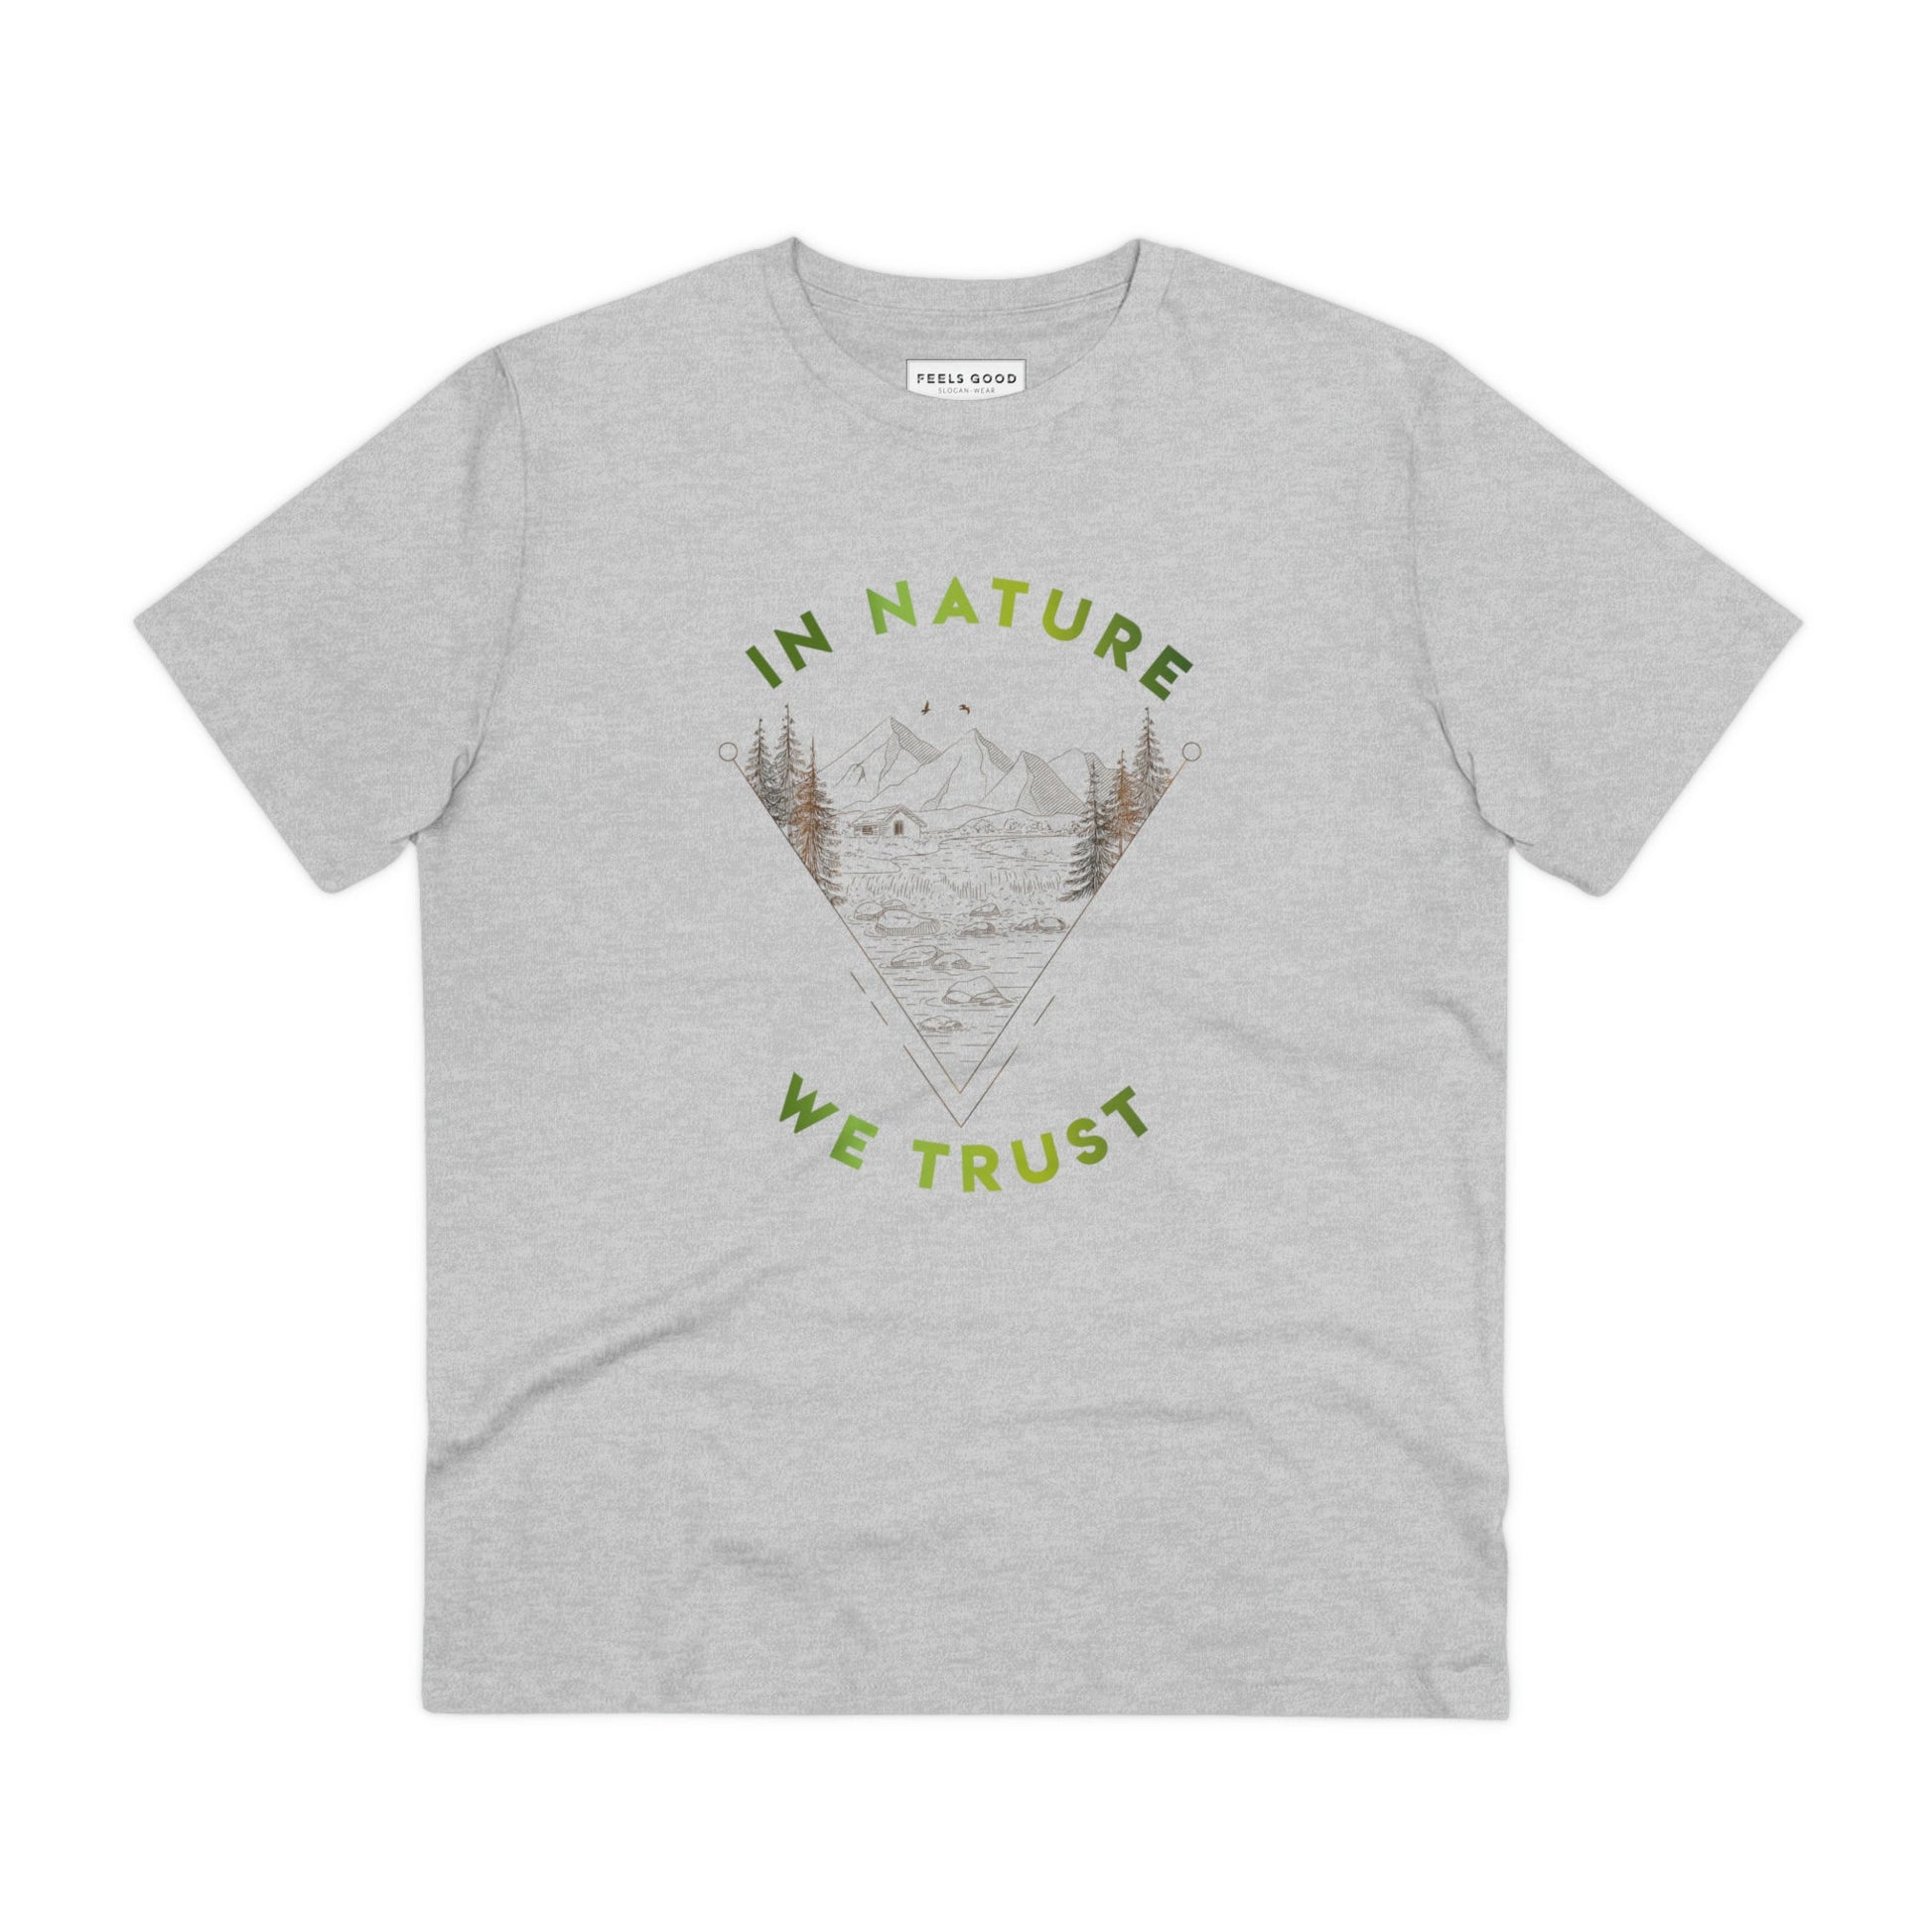 Organic Cotton 'In Nature We Trust' T-shirt - Fun Tshirt